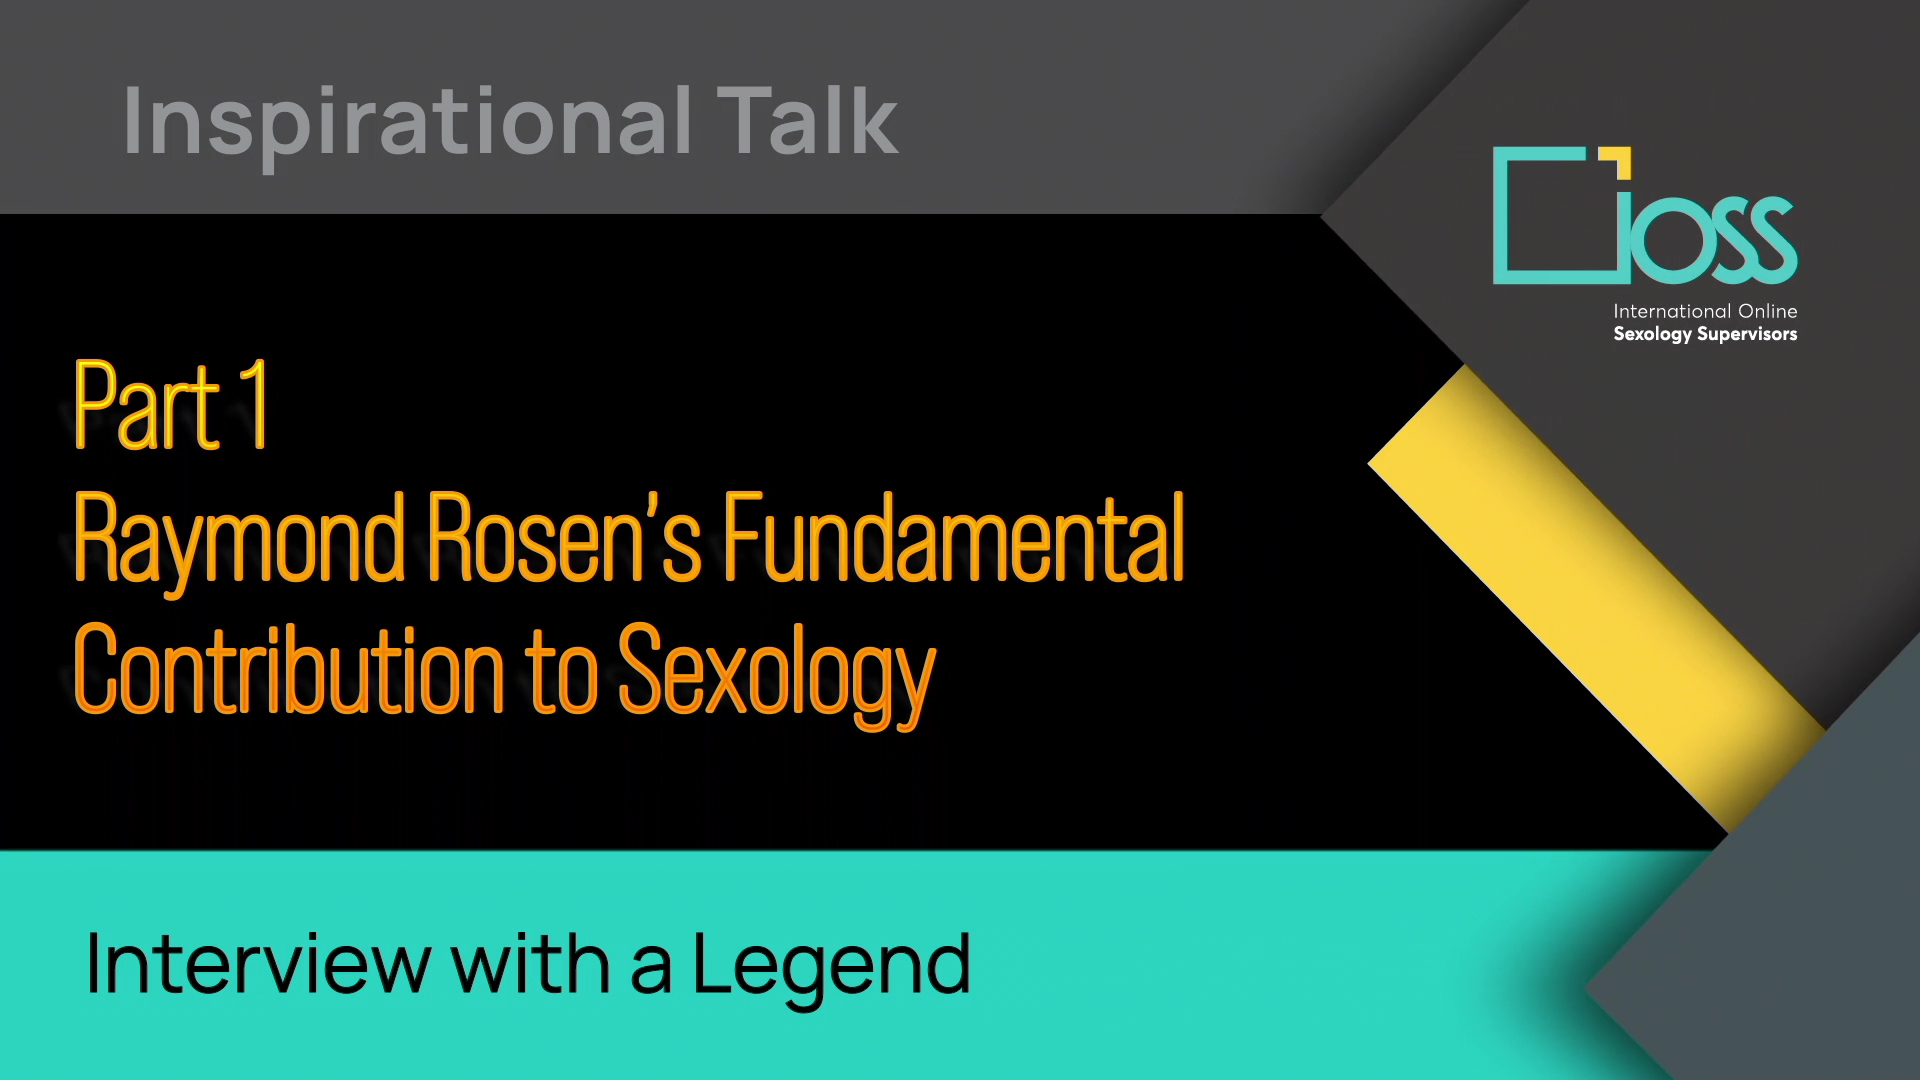 Part 1 Raymond Rosen’s Fundamental Contribution to Sexology (Part 1 & 2)